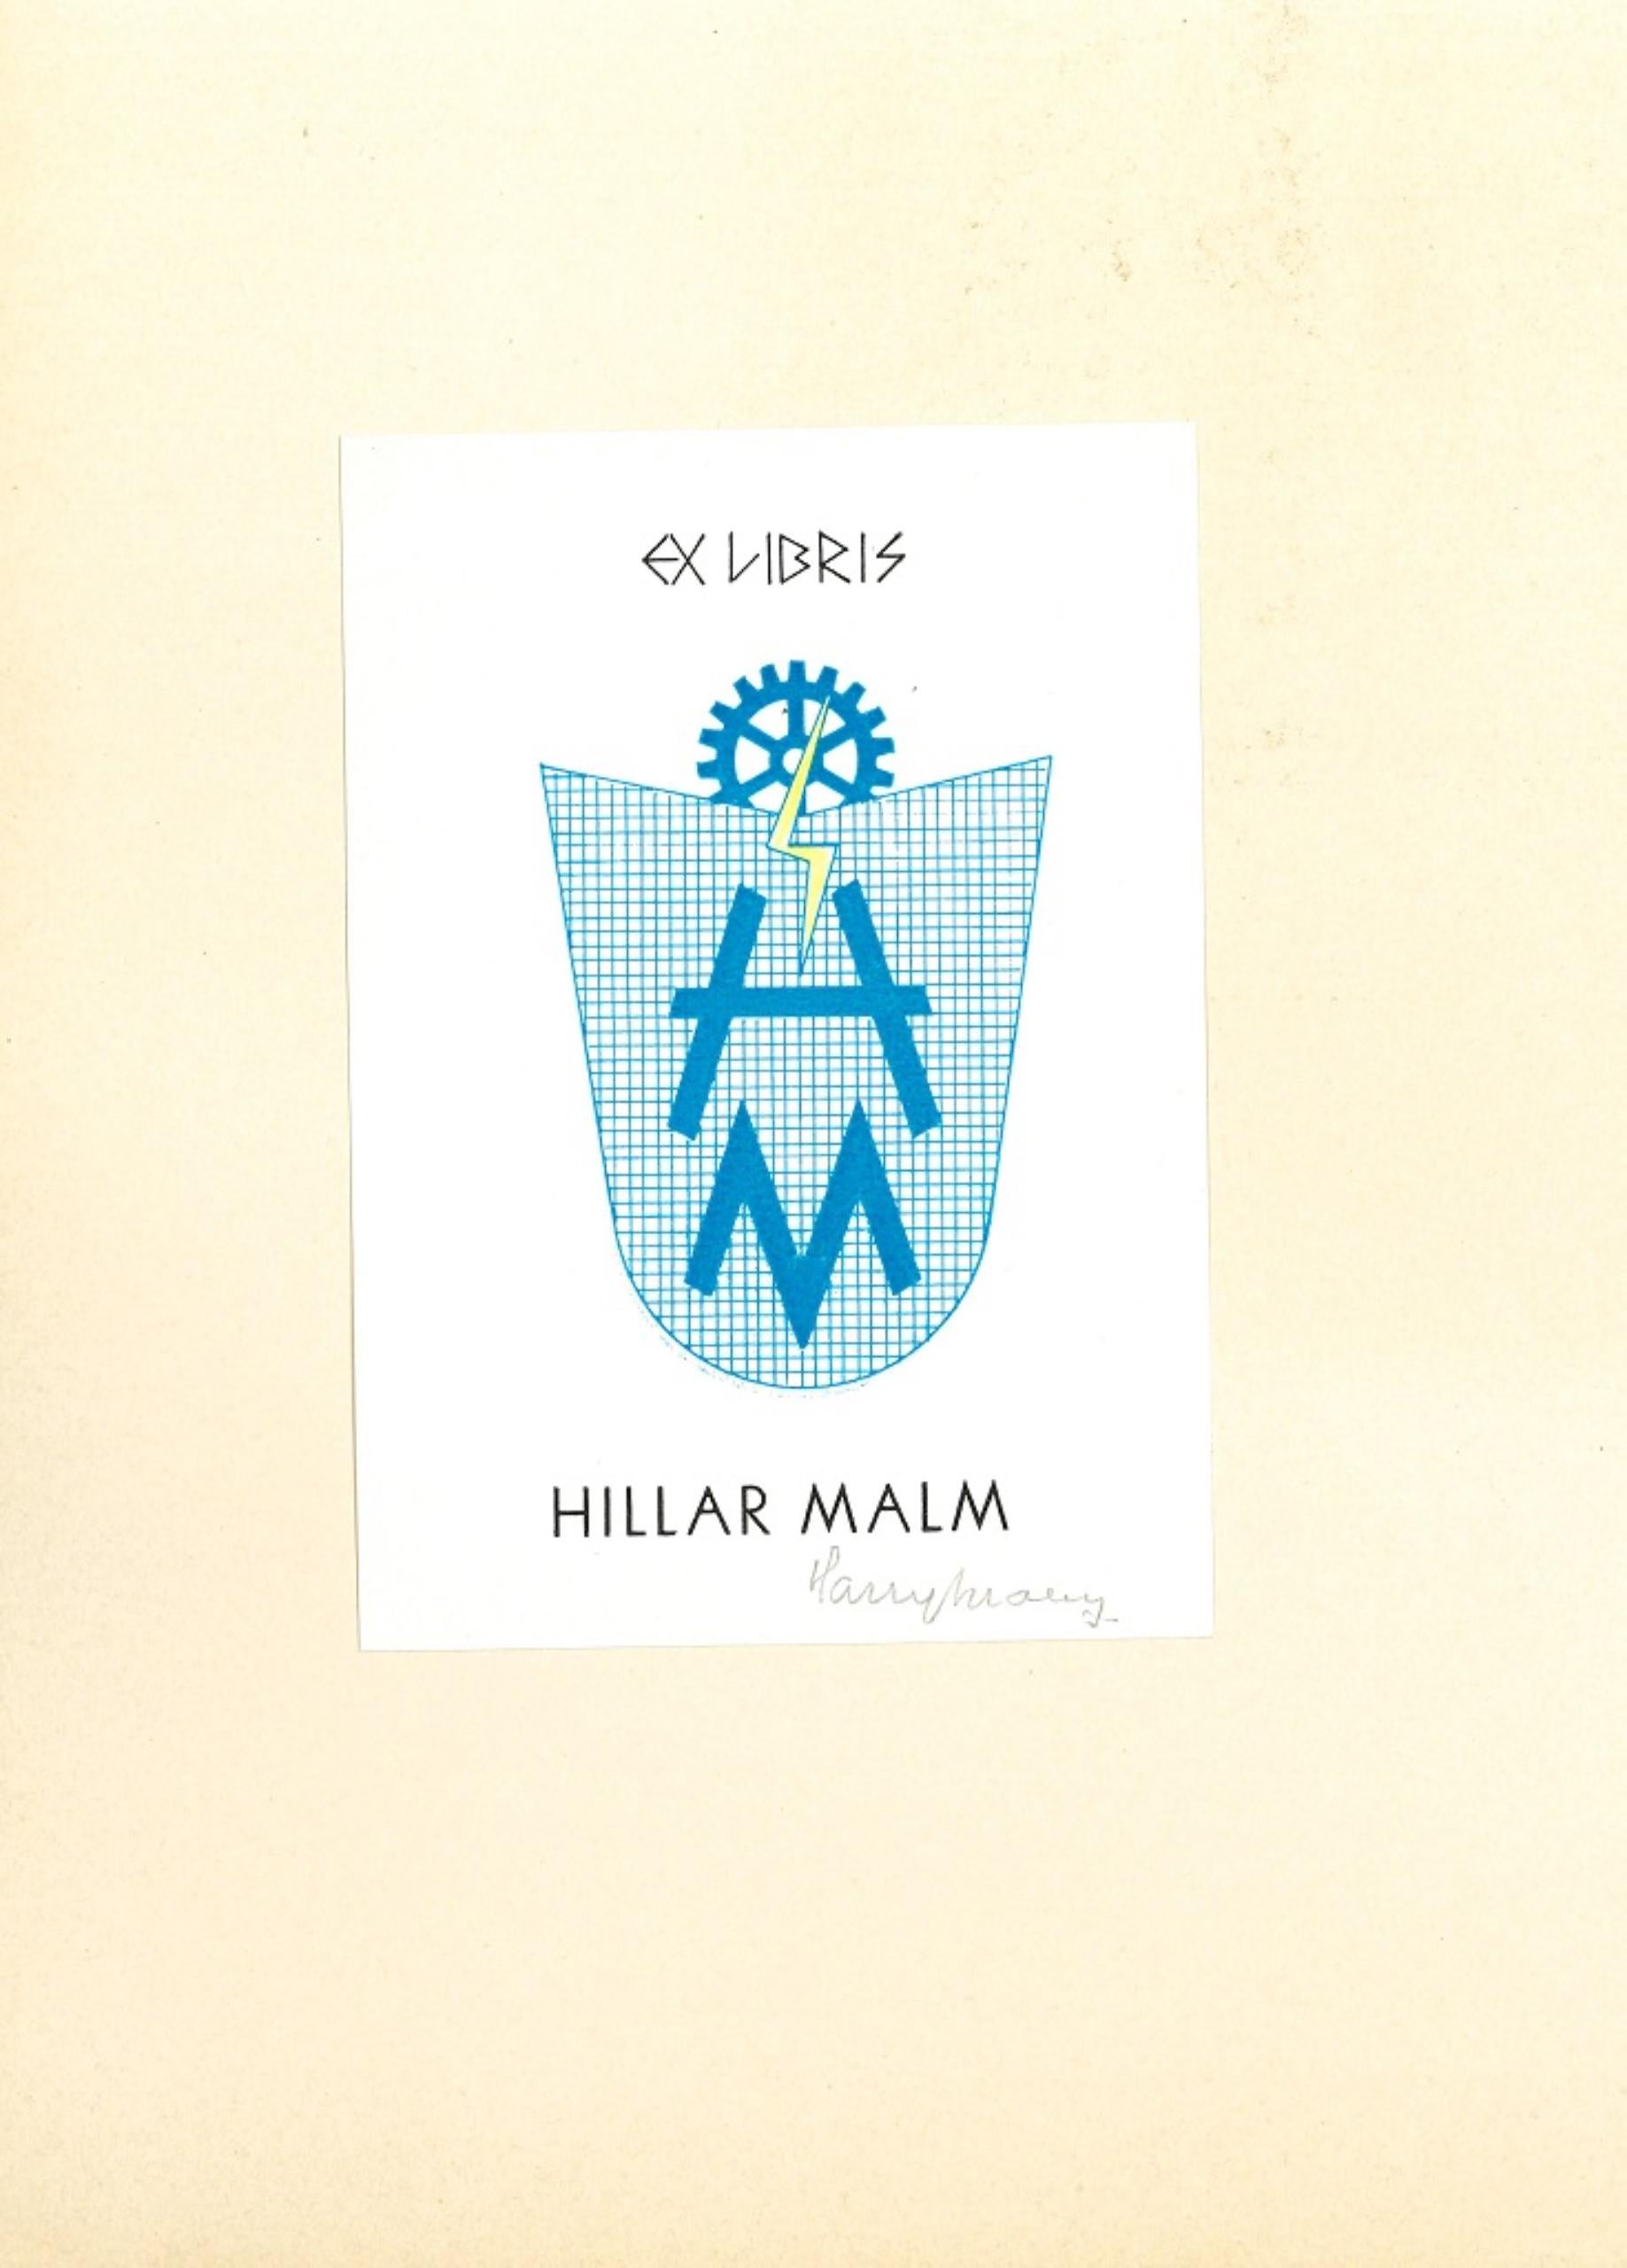 Unknown Abstract Print - Ex Libris Hillar Malm - Original Lithograph - Mid-20th Century